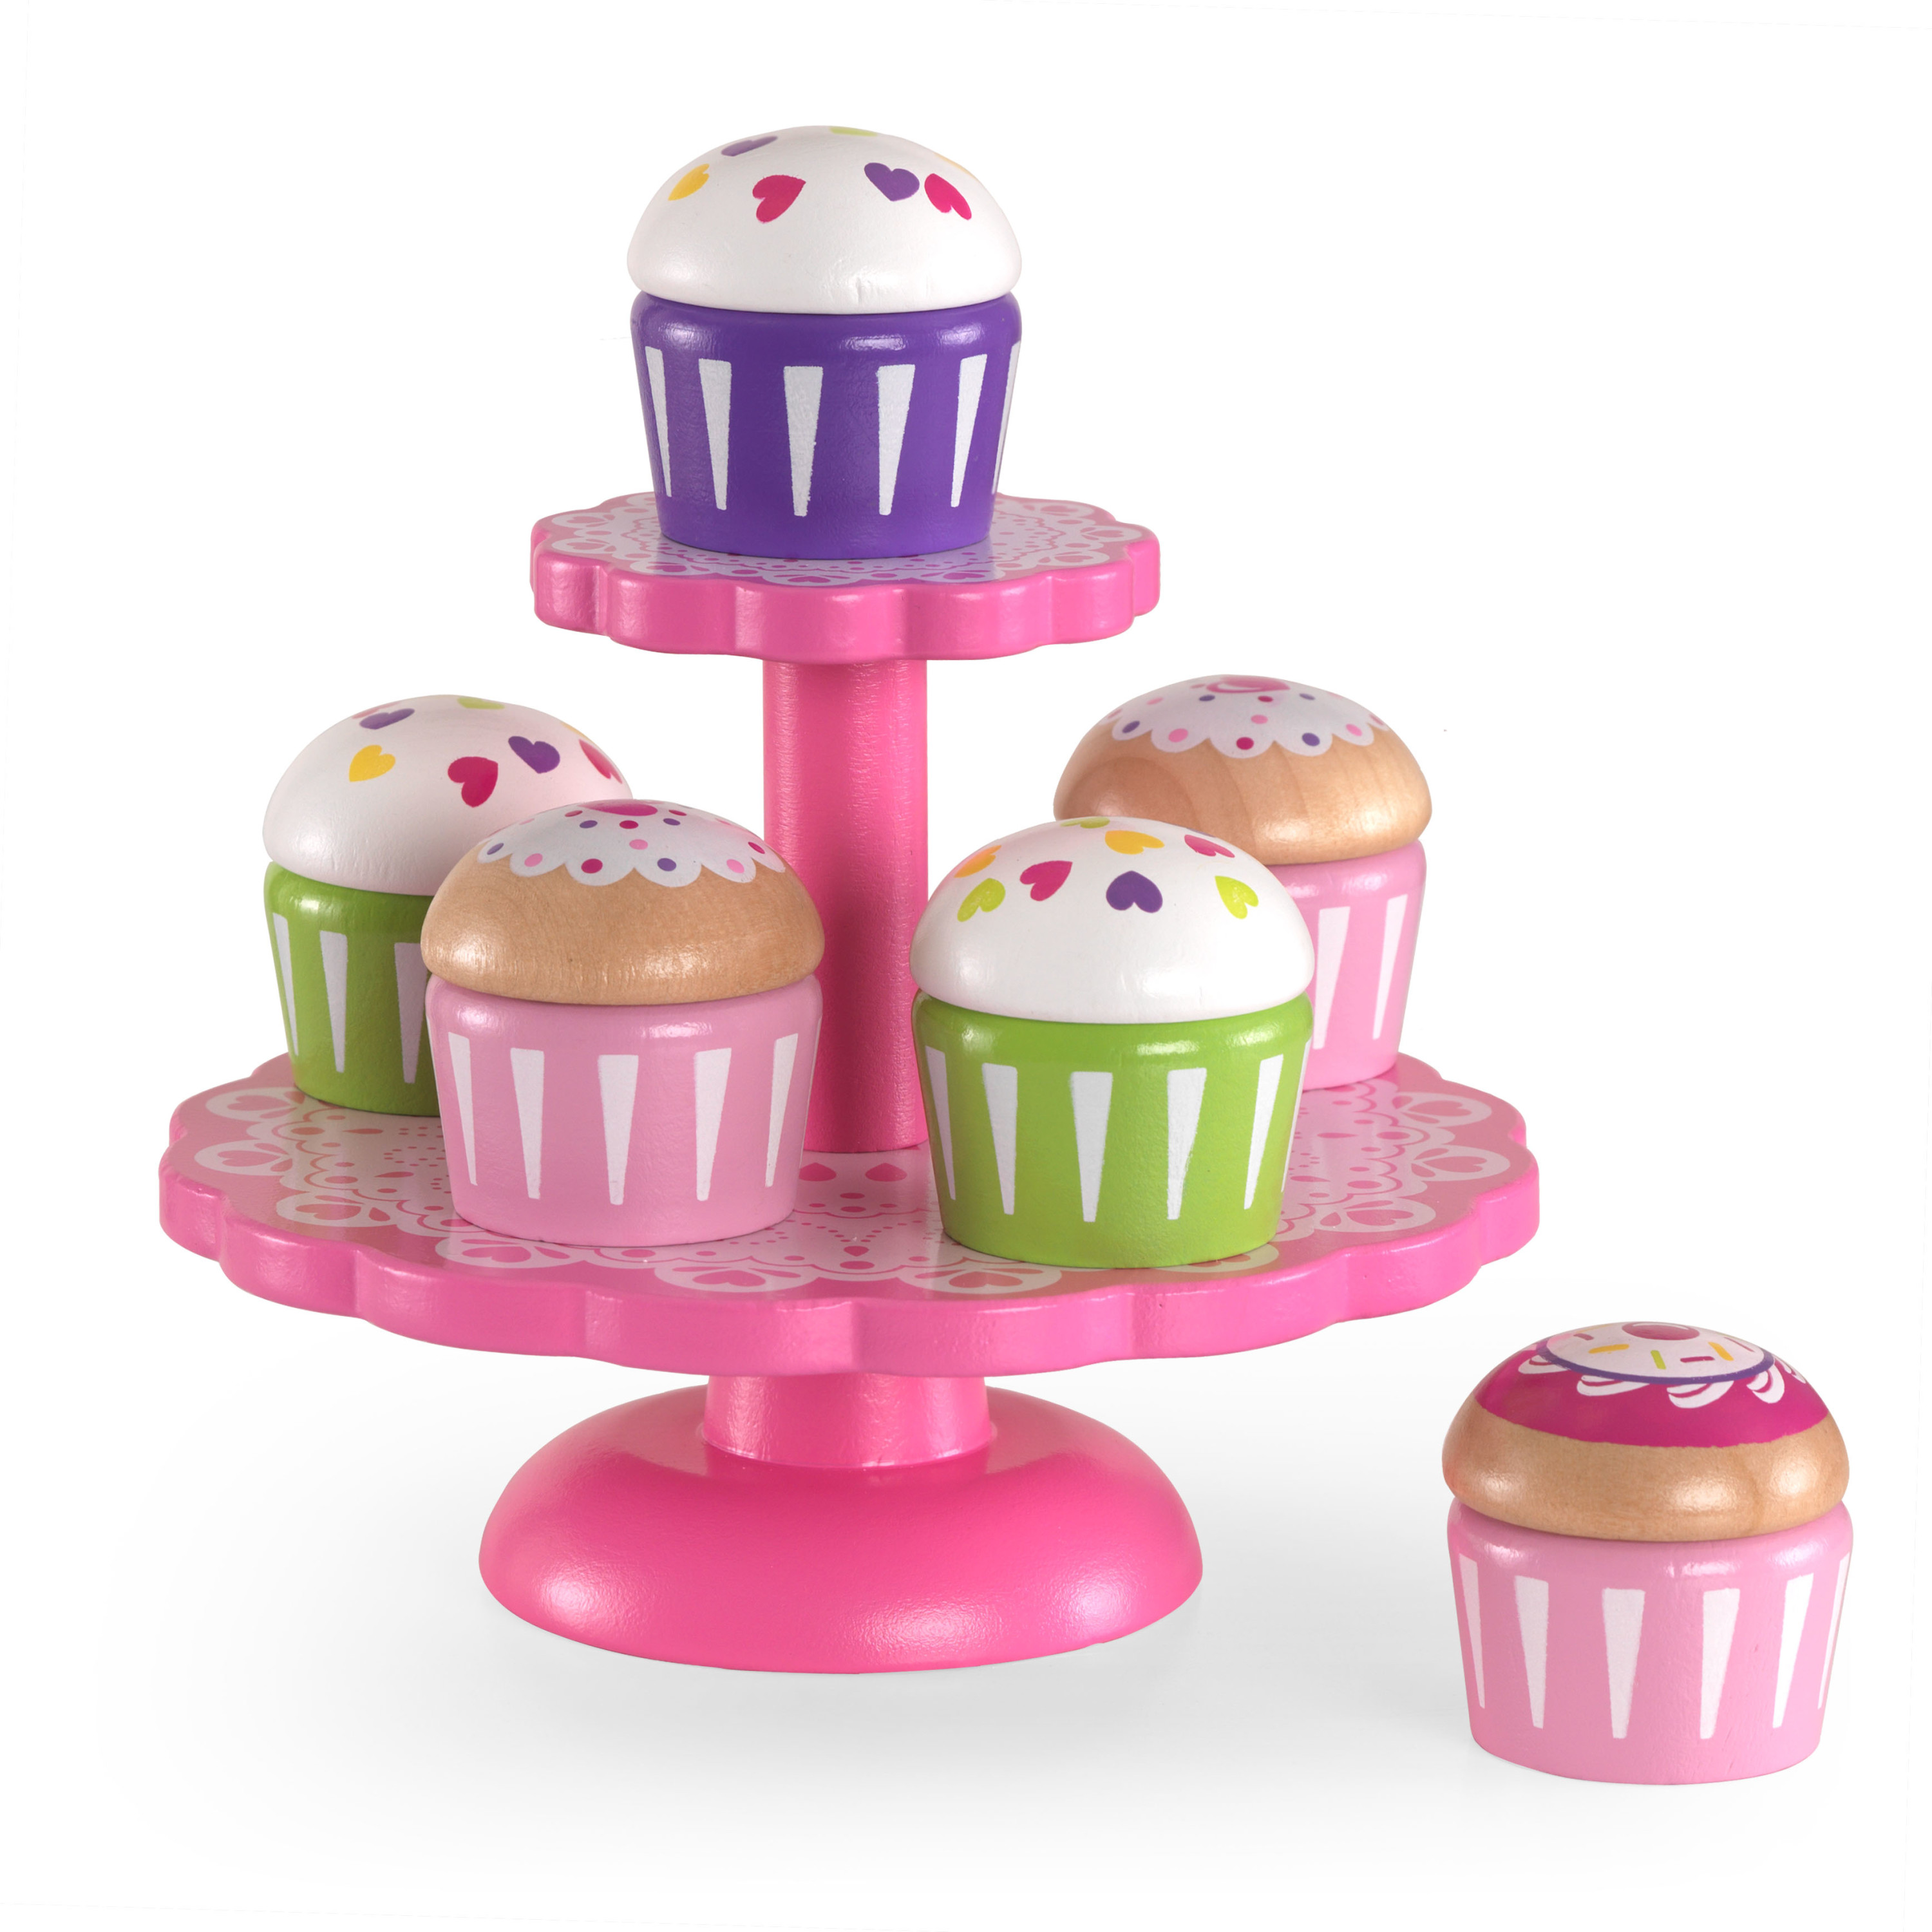 KidKraft Cupcake-Ständer mit Cupcakes - image 1 of 3